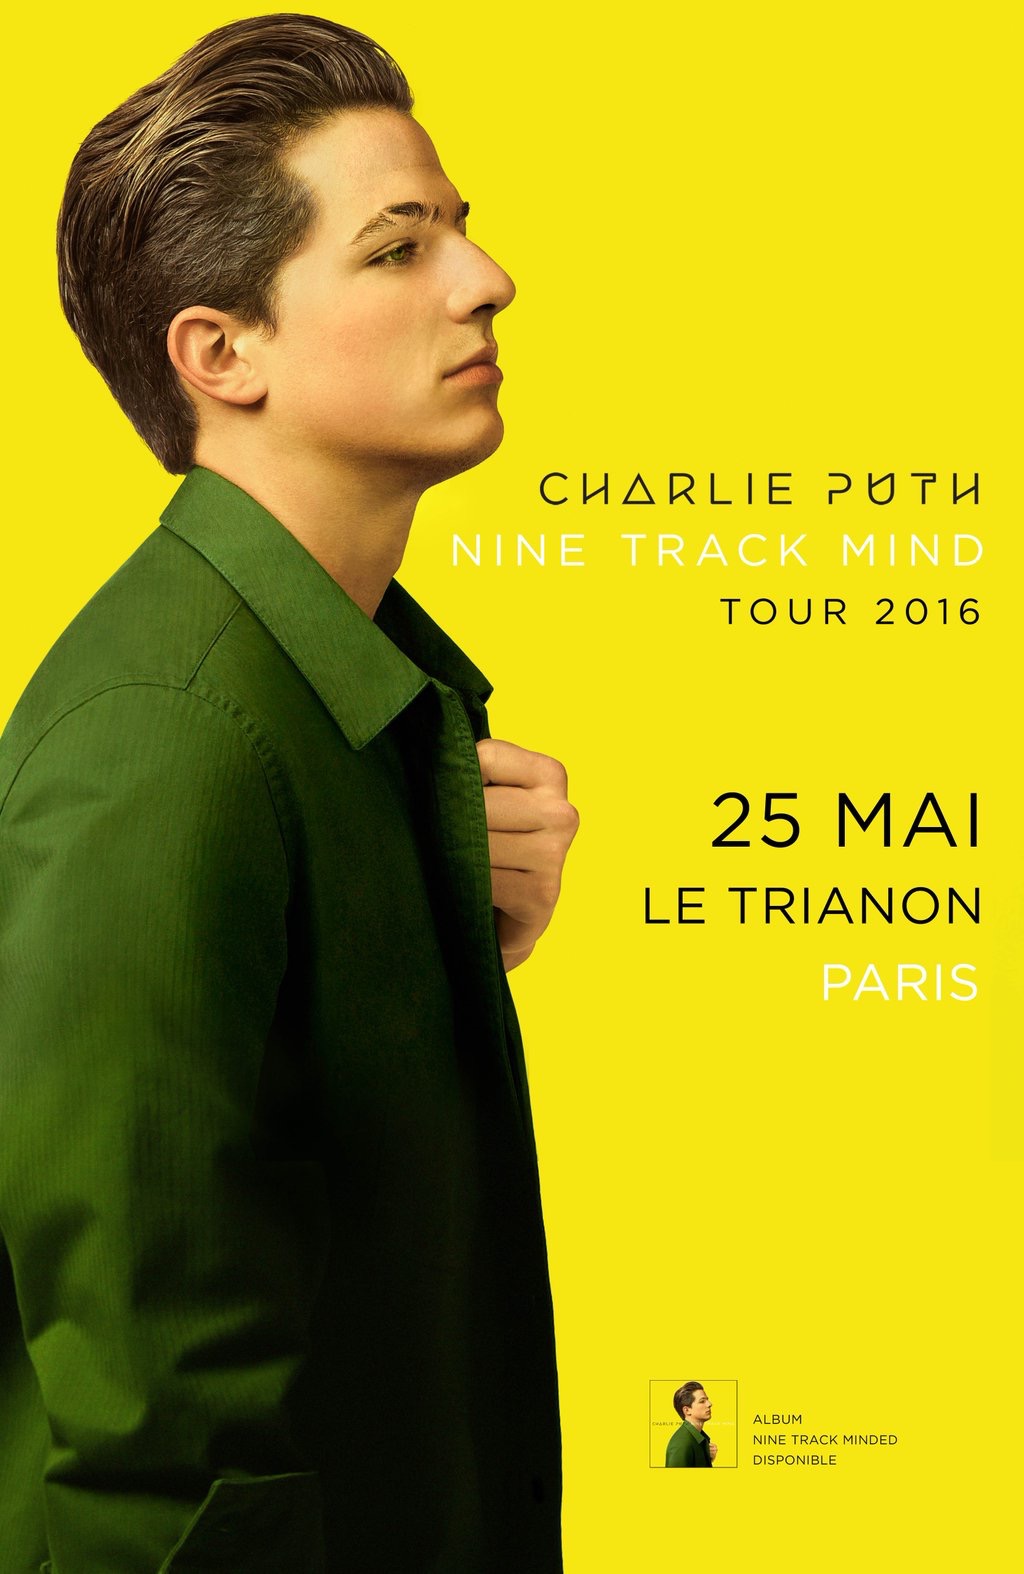 Charlie Puth JustMusic.fr